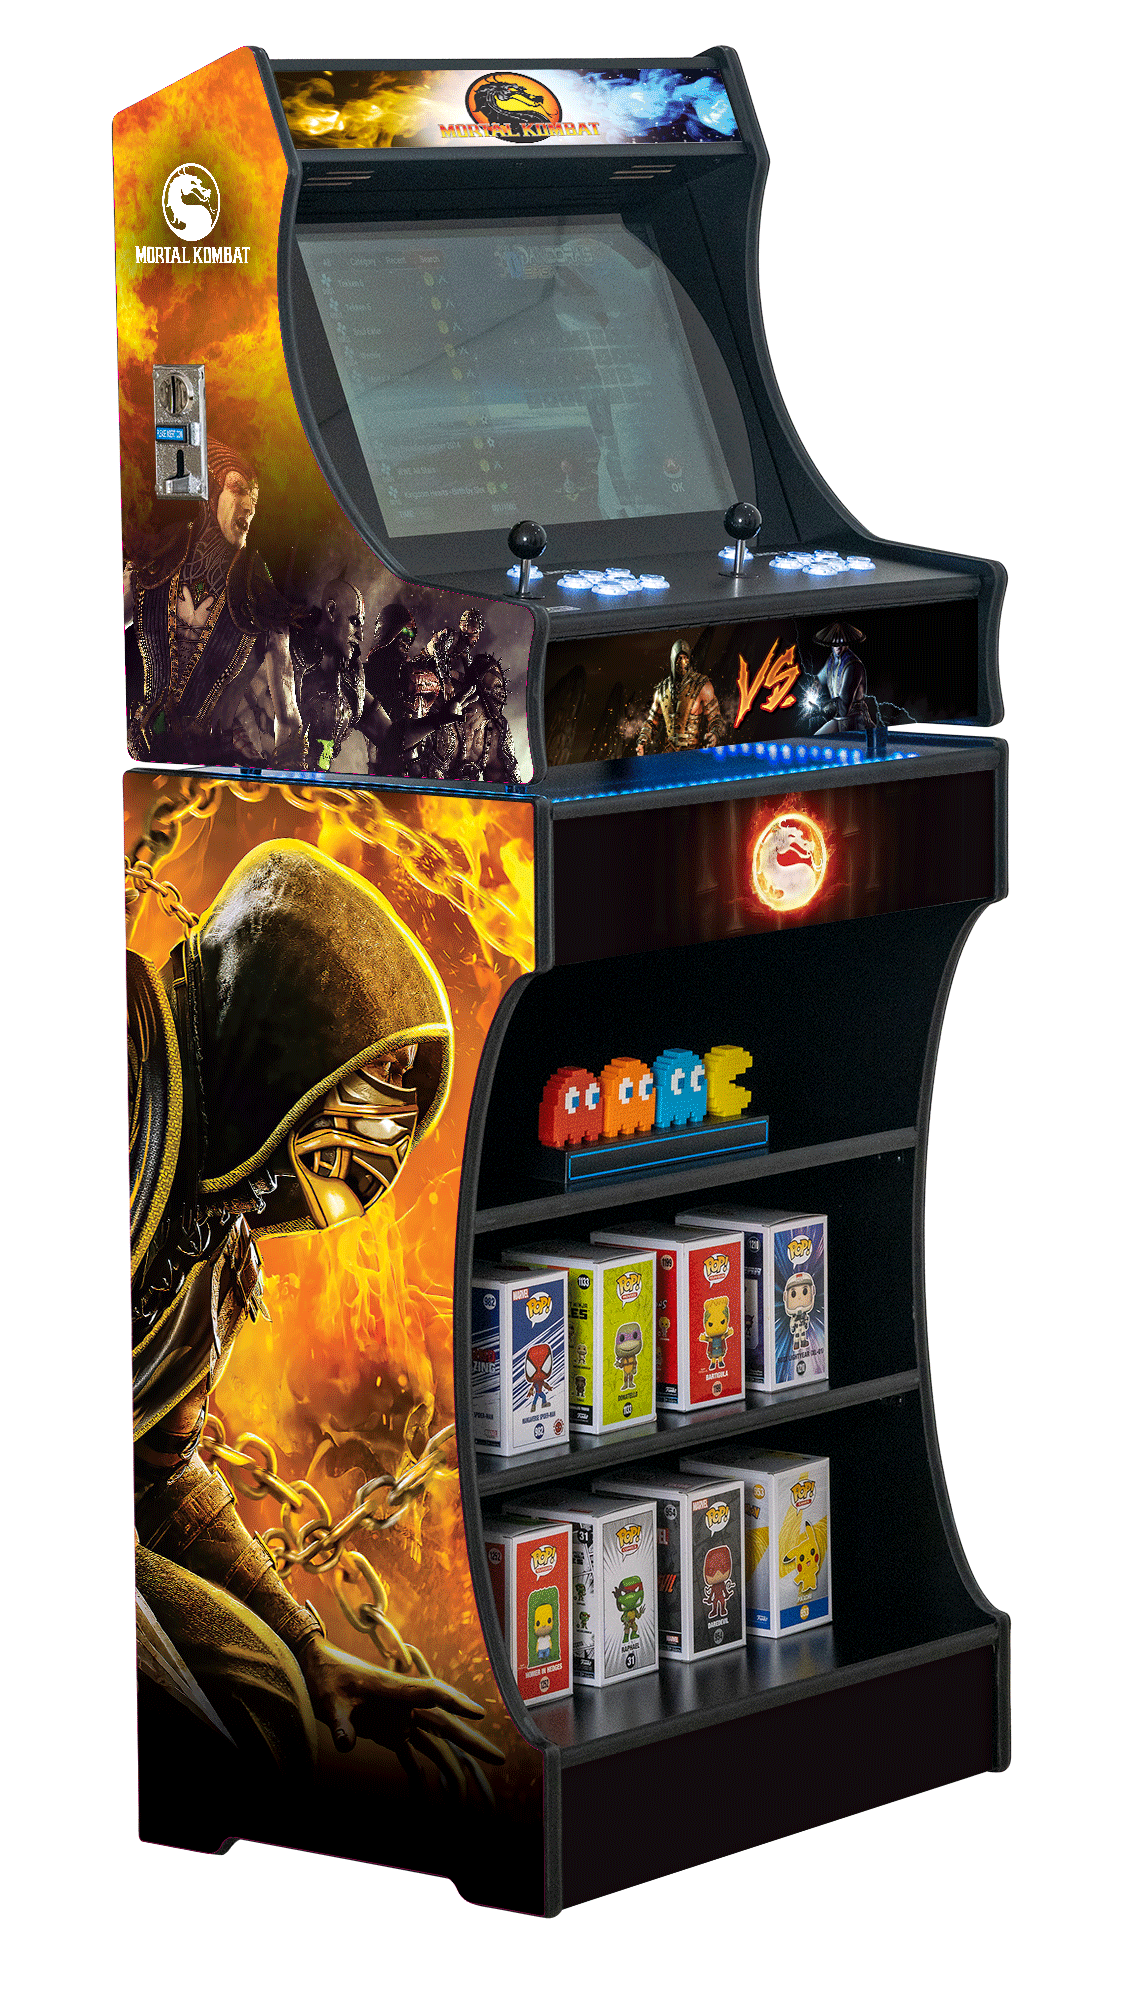 Products Upright 24" Arcade Machine